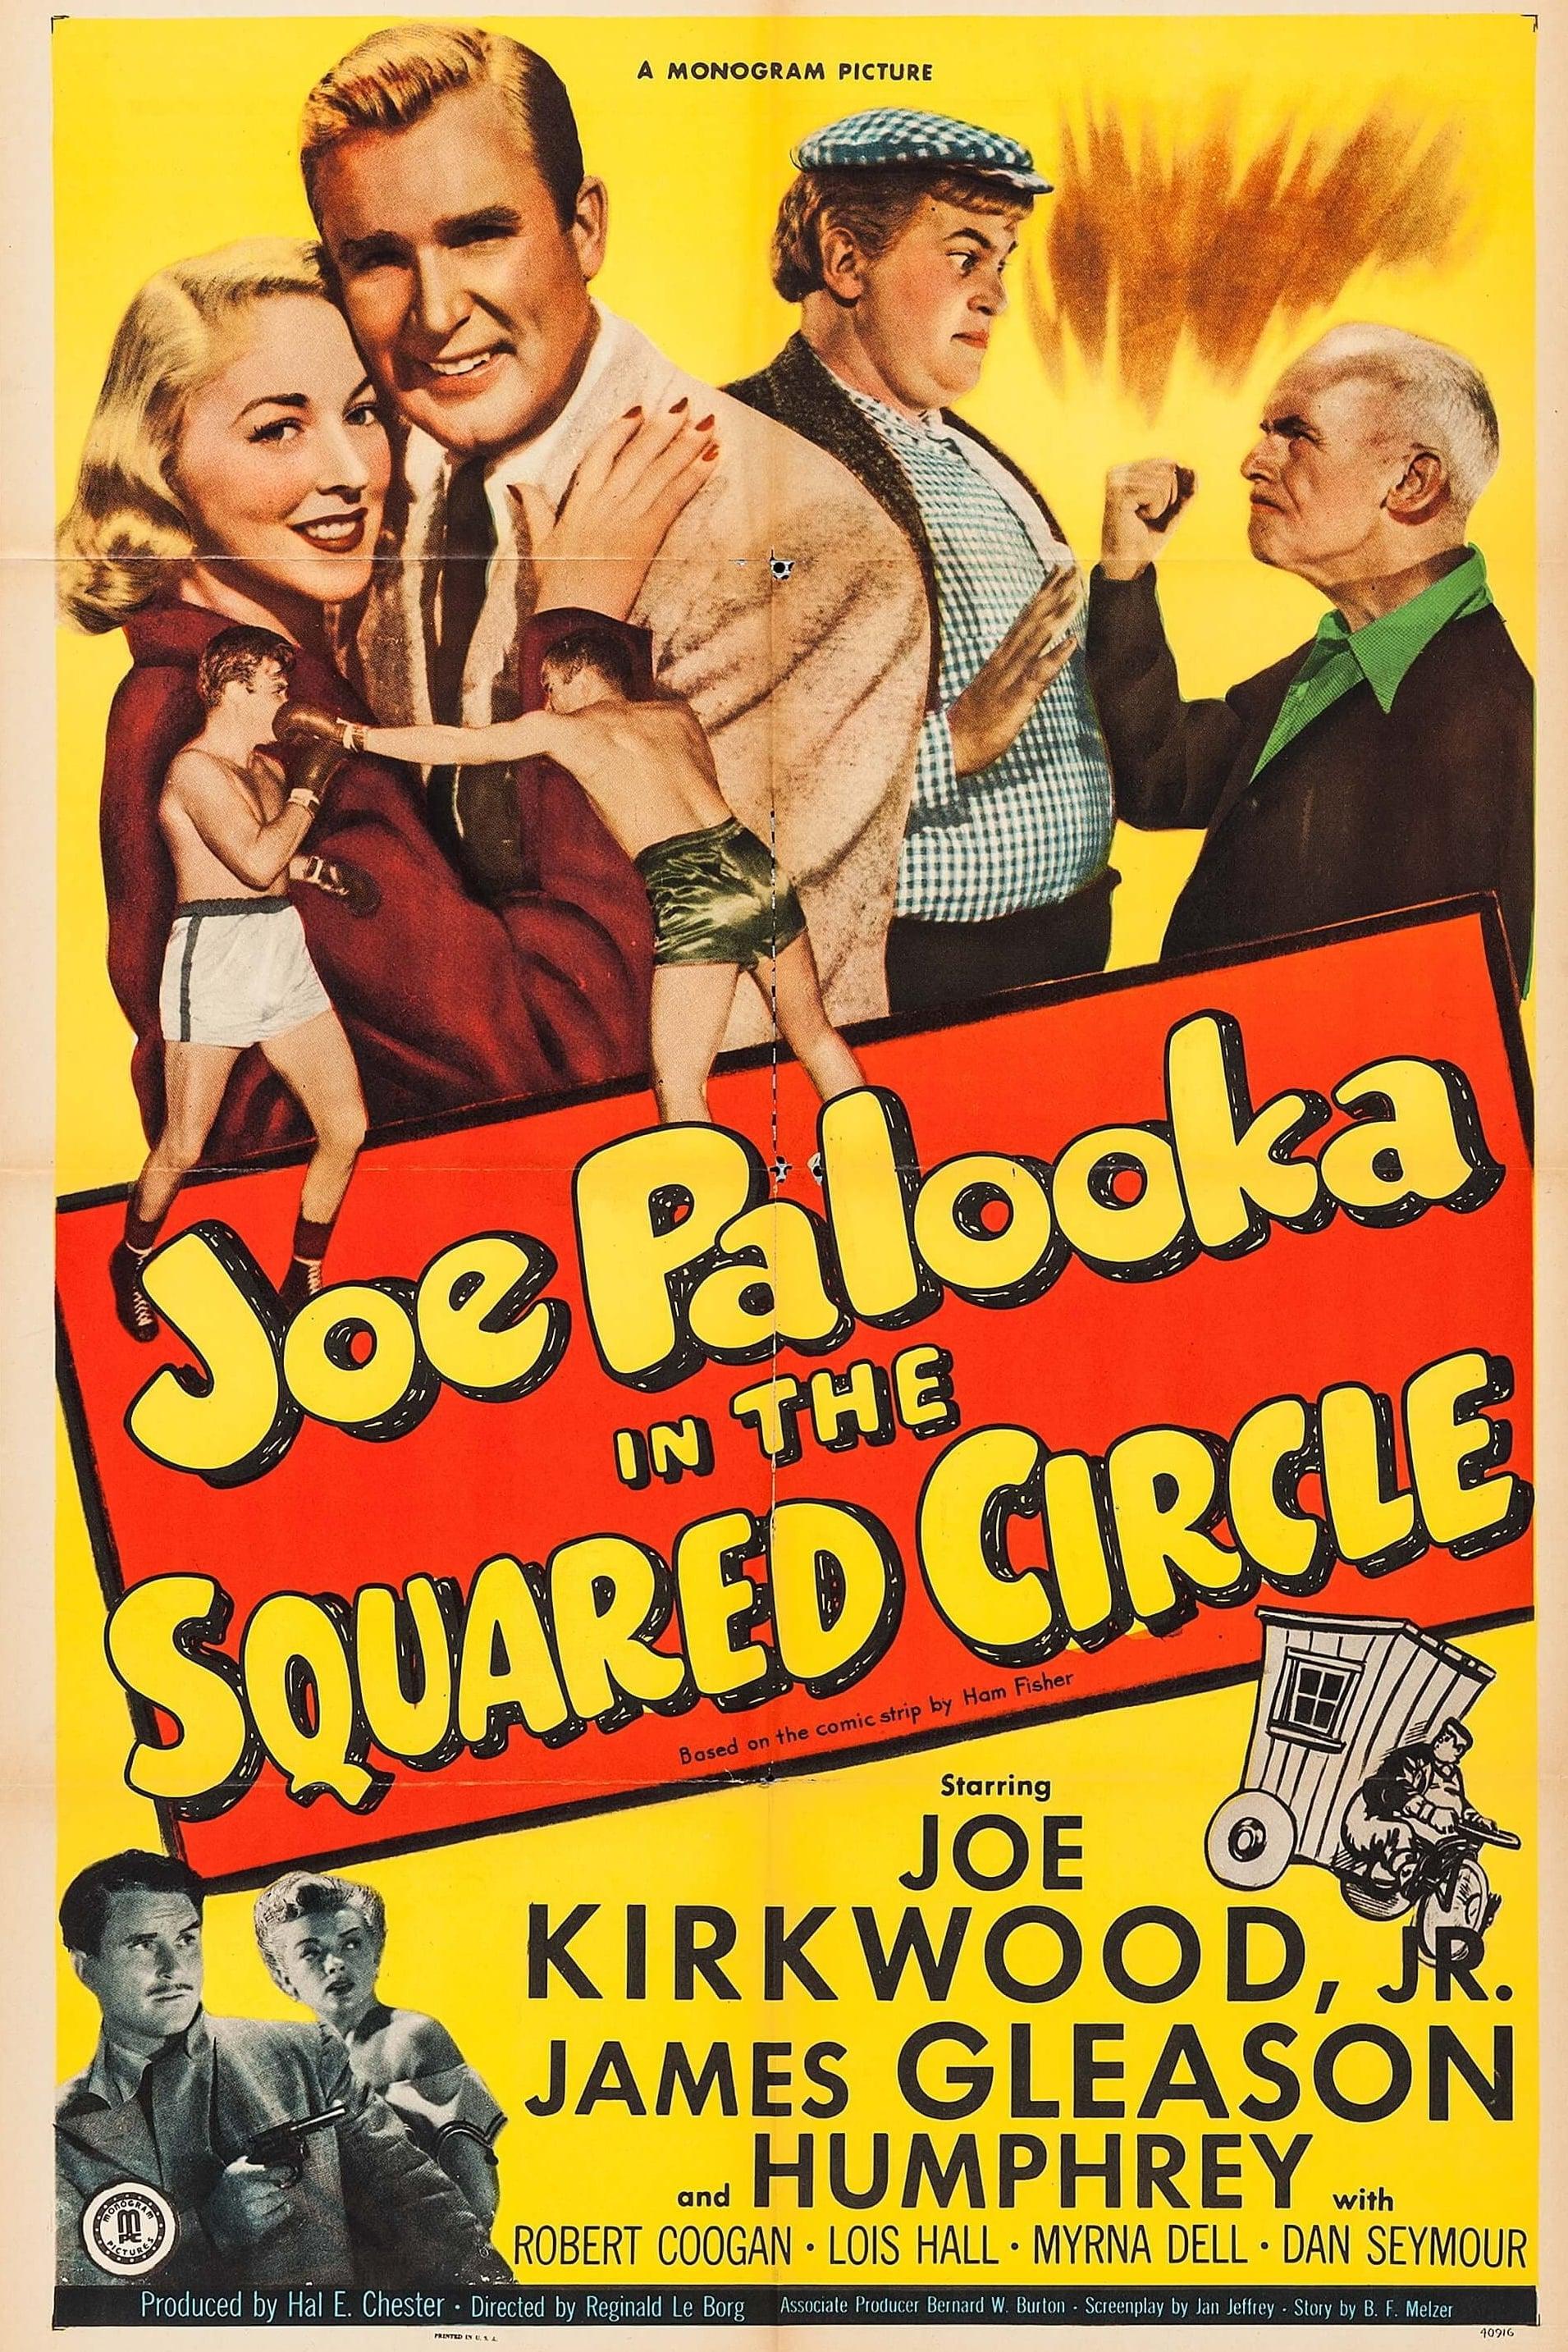 Joe Palooka in the Squared Circle poster